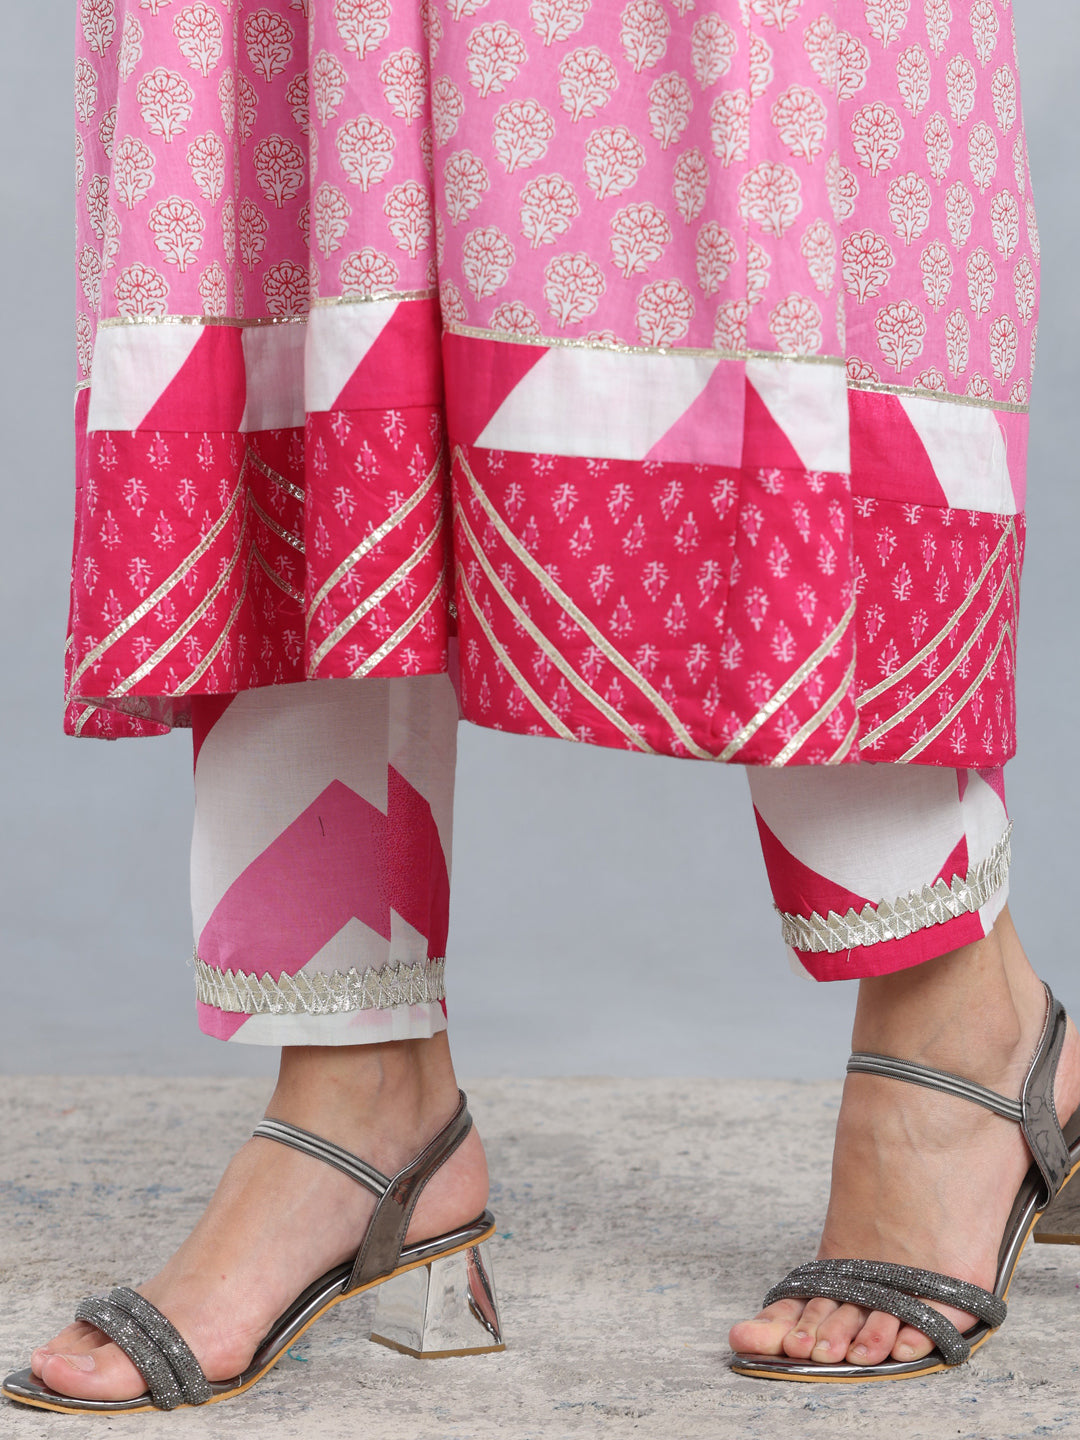 Pink Anarkali Kurta Set from Shaye , Kurta Pajama 2 piece set for women